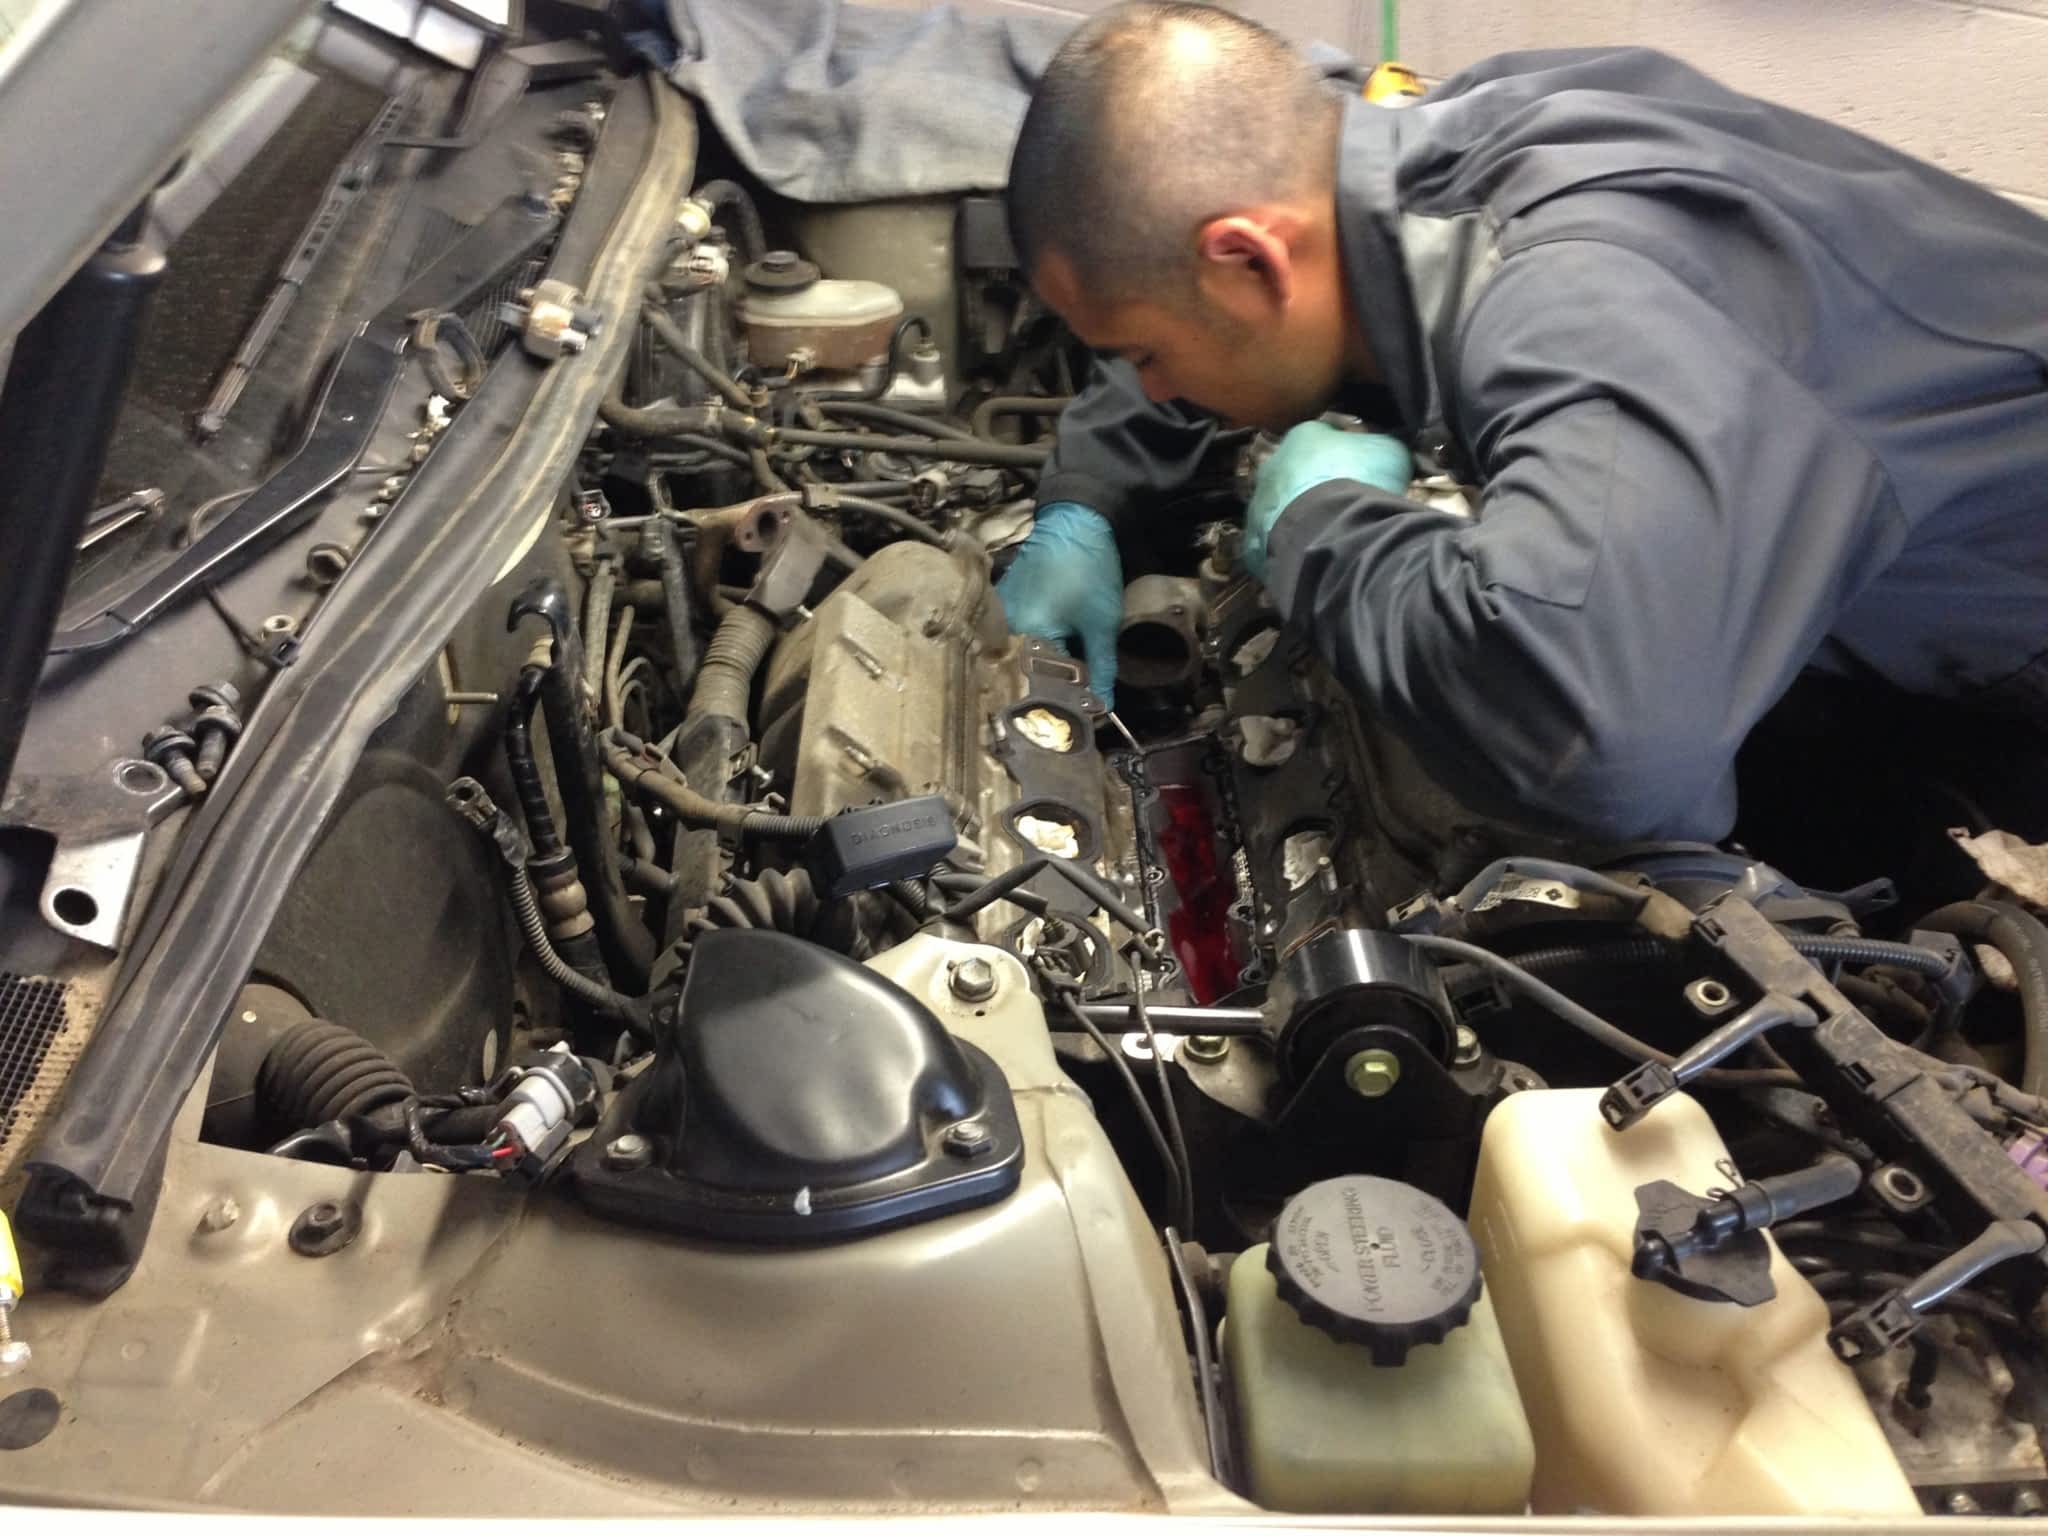 photo Wilson's Auto Tech Toyota Honda Acura Service & Repair